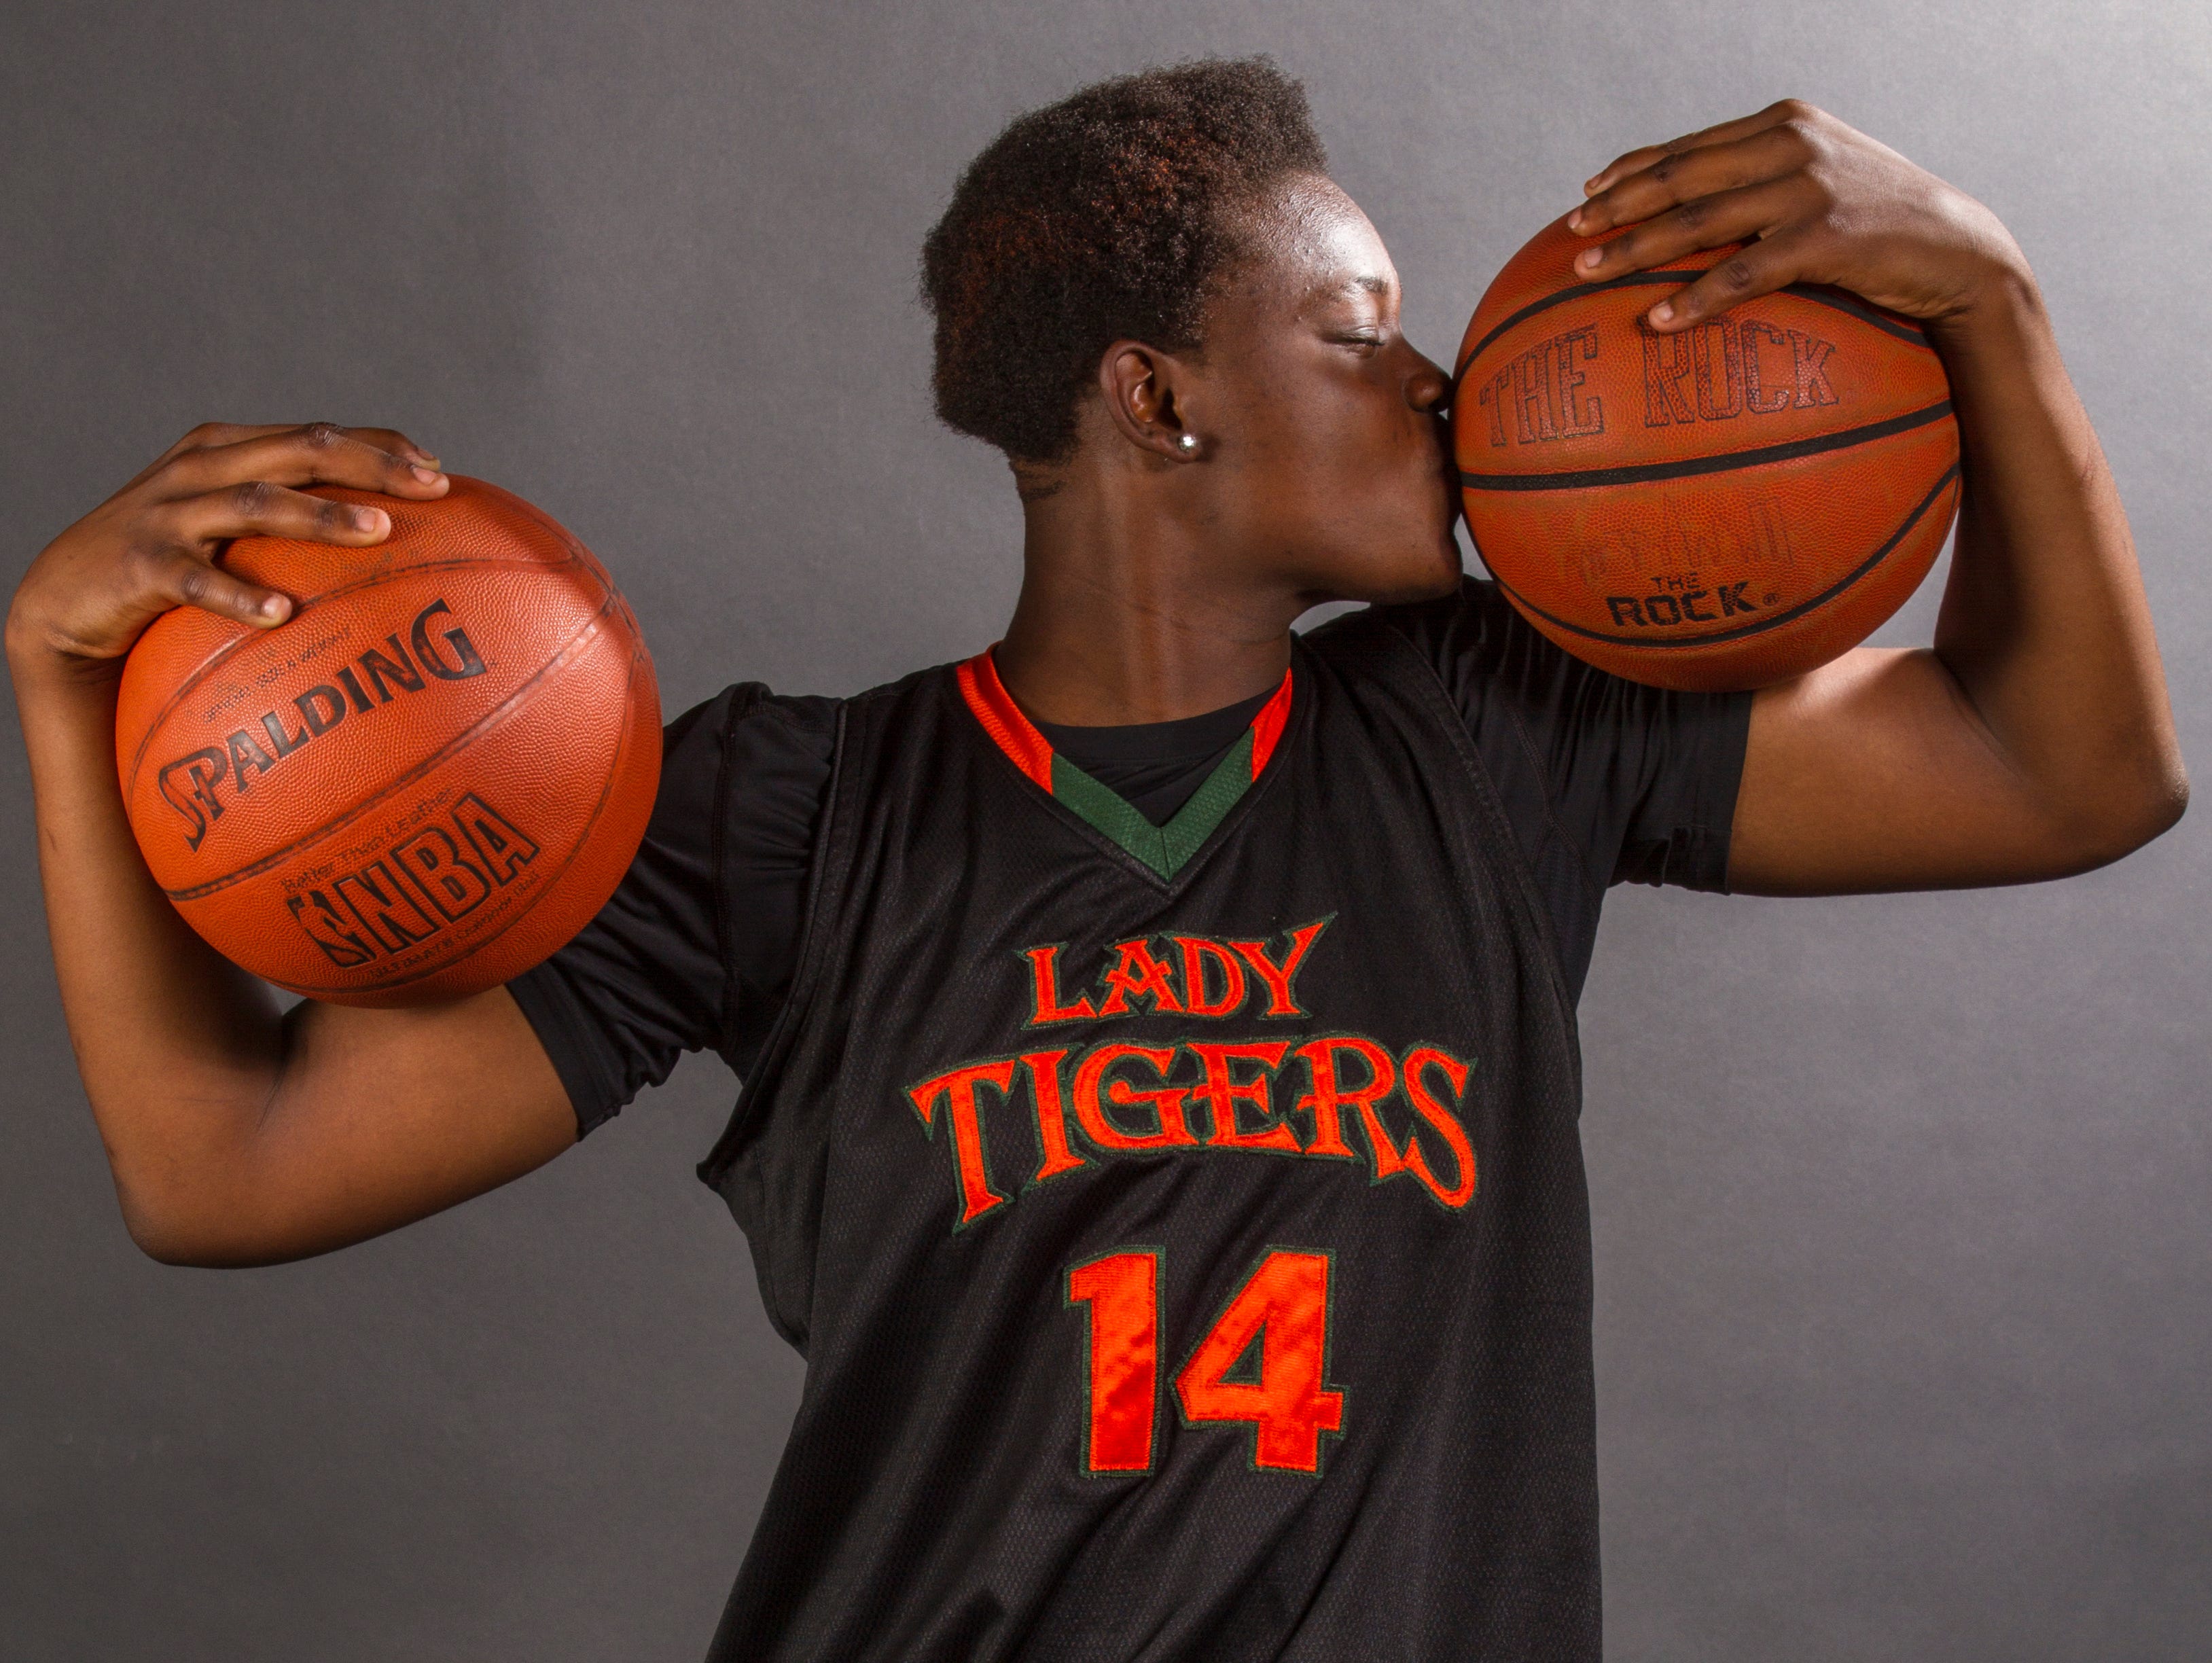 Ja'Miah Bland, 15, is a sophomore basketball player at Dunbar High School.